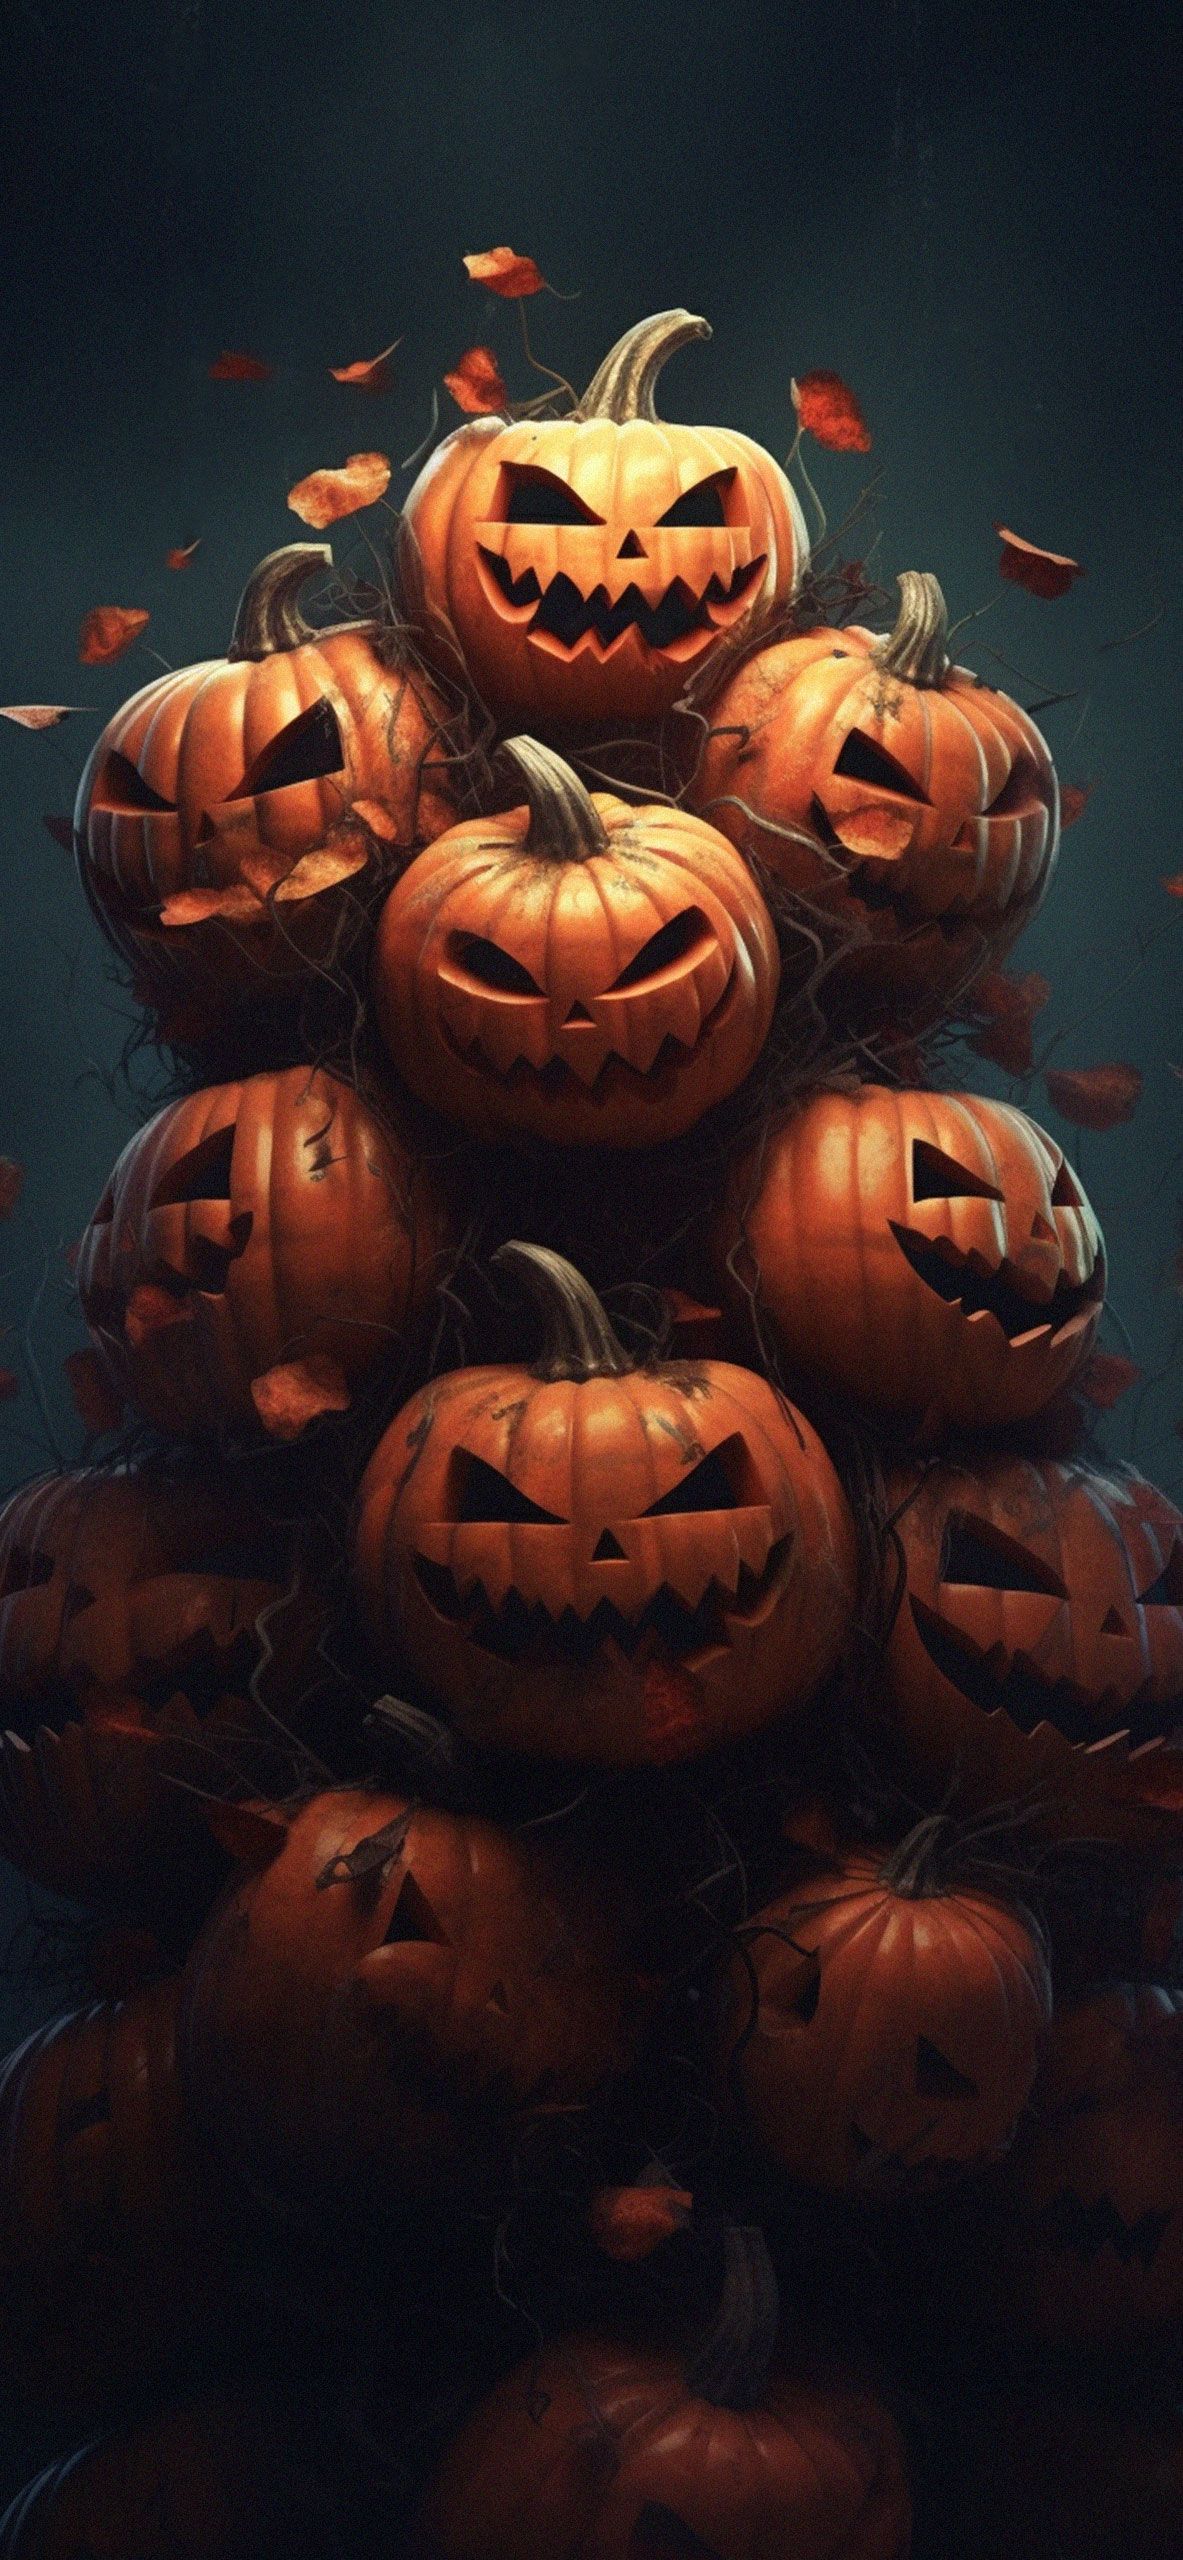 IPhone wallpaper of a stack of carved Halloween pumpkins - Halloween, pumpkin, dark orange, spooky, cute Halloween